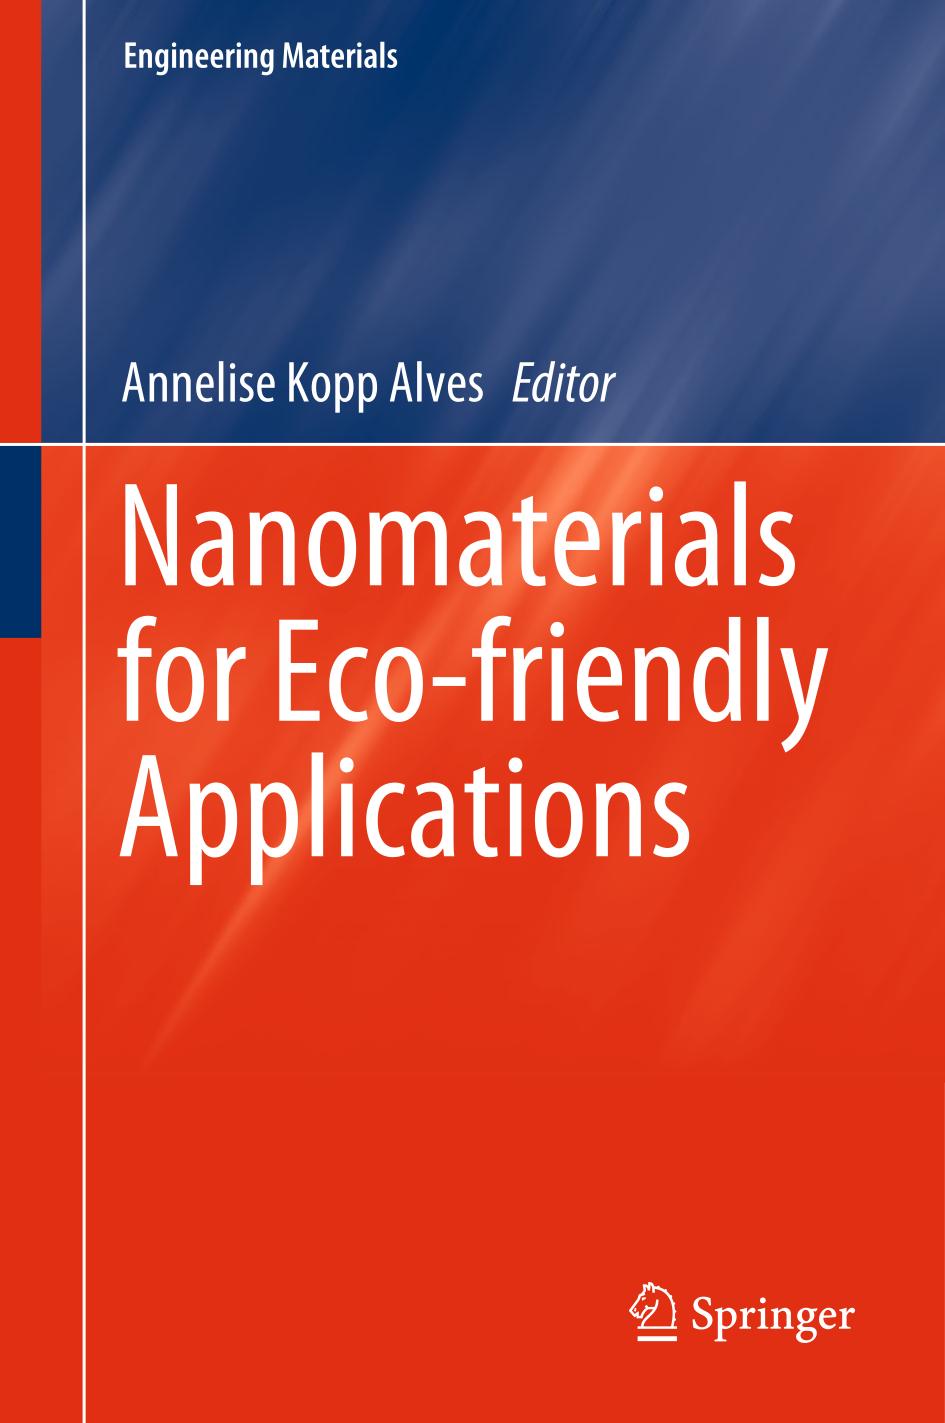 Nanomaterials for Eco-Friendly Applications